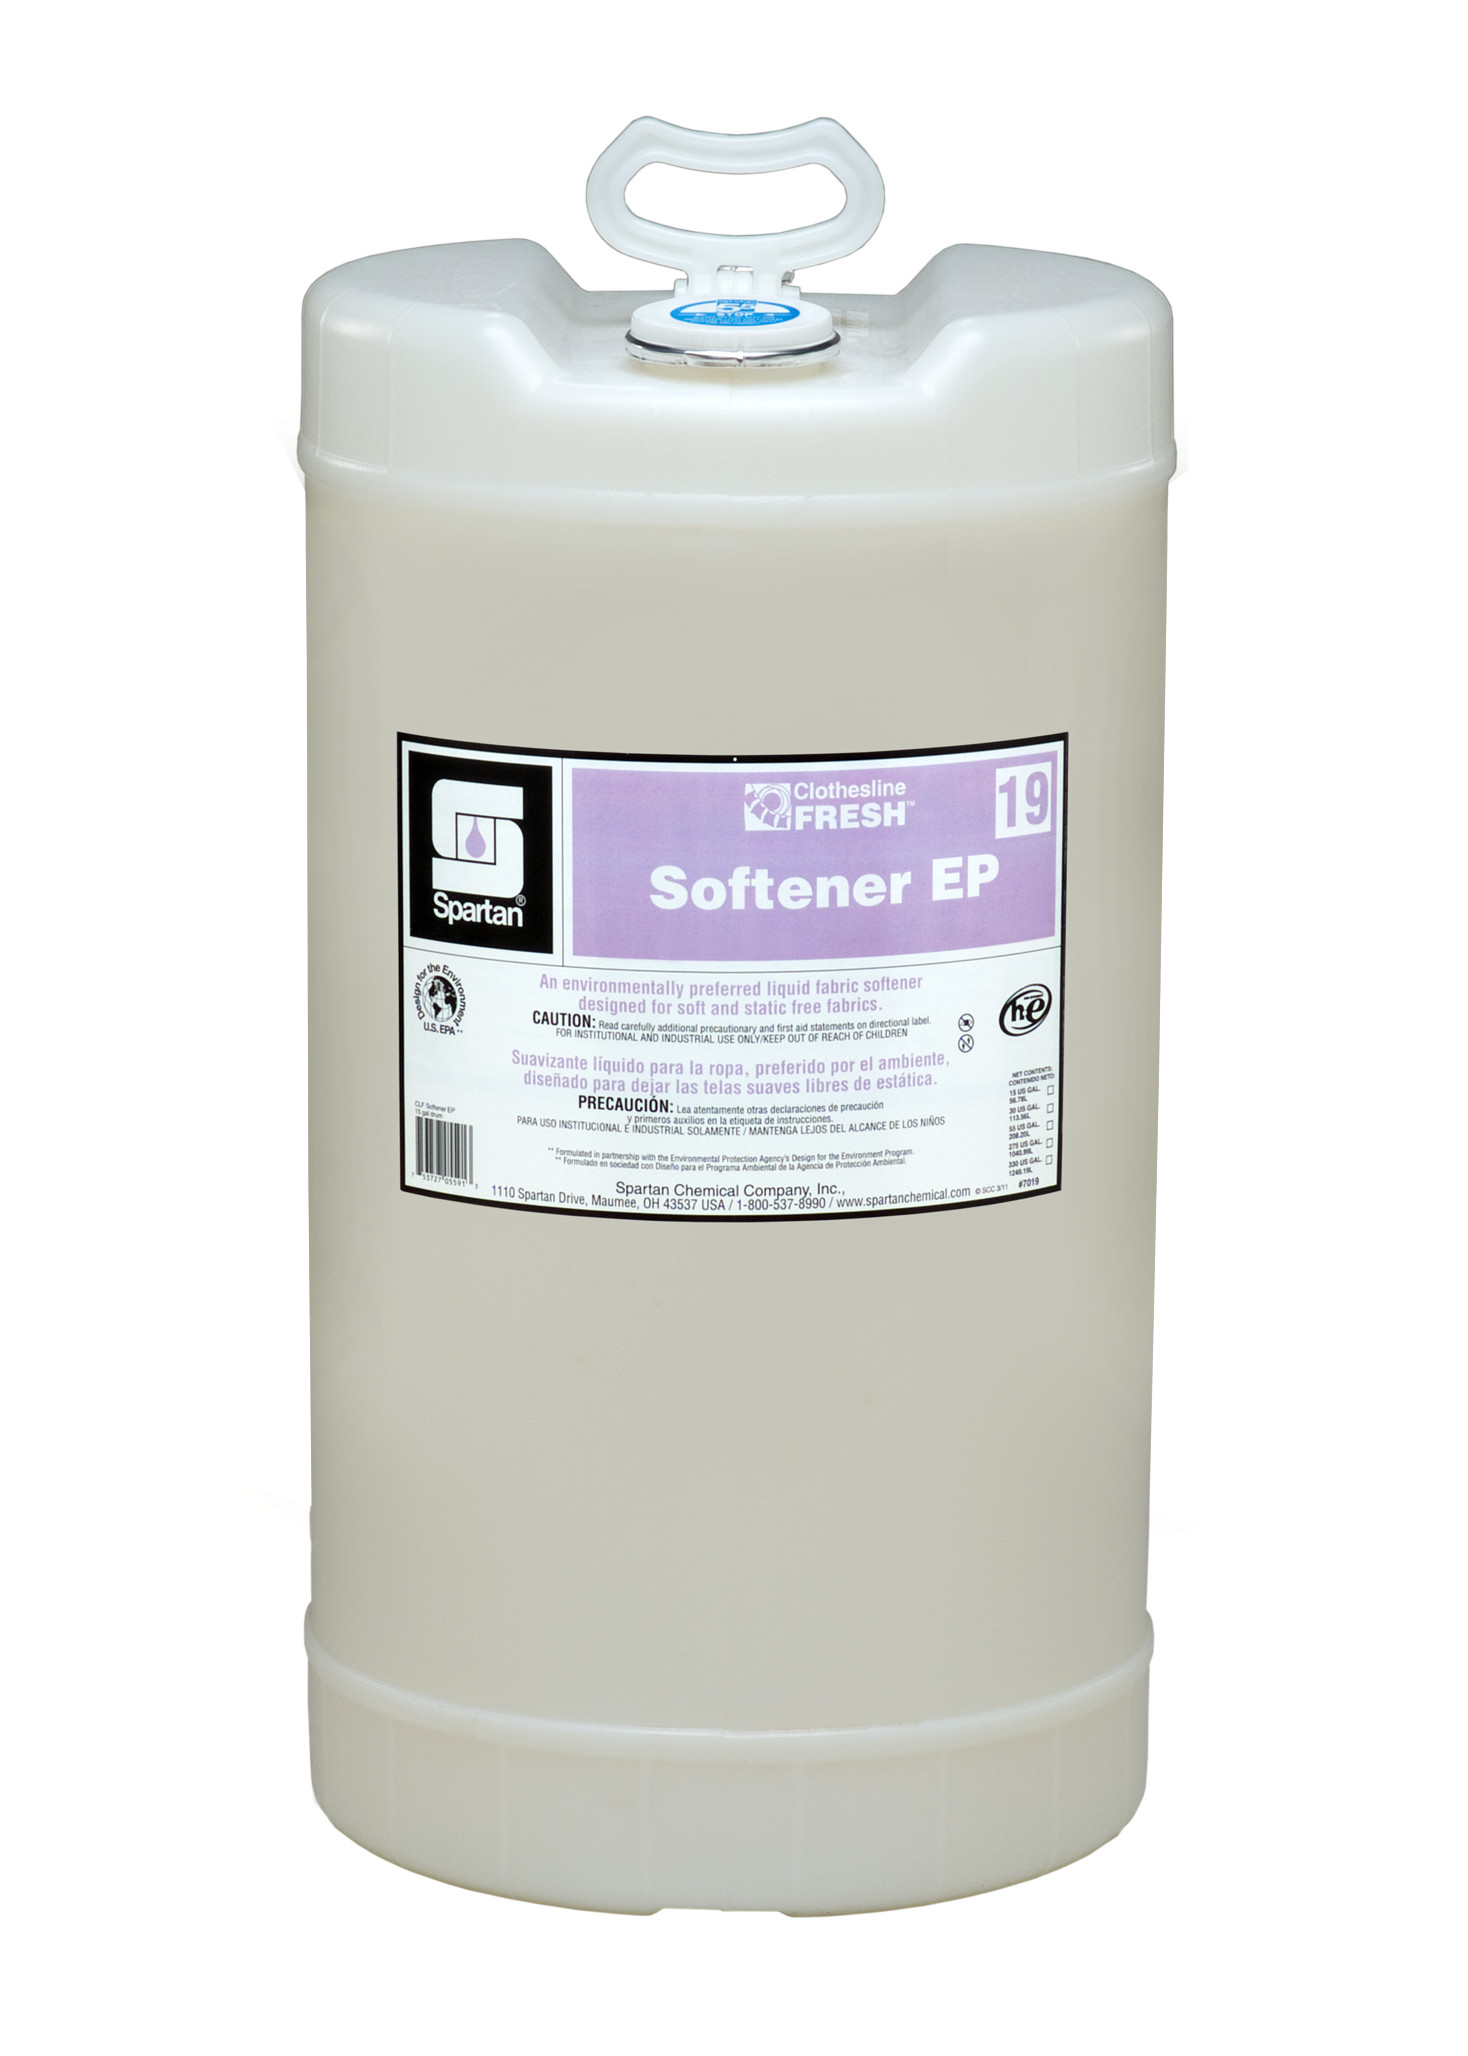 Spartan Chemical Company Clothesline Fresh Softener EP 19, 15 GAL DRUM